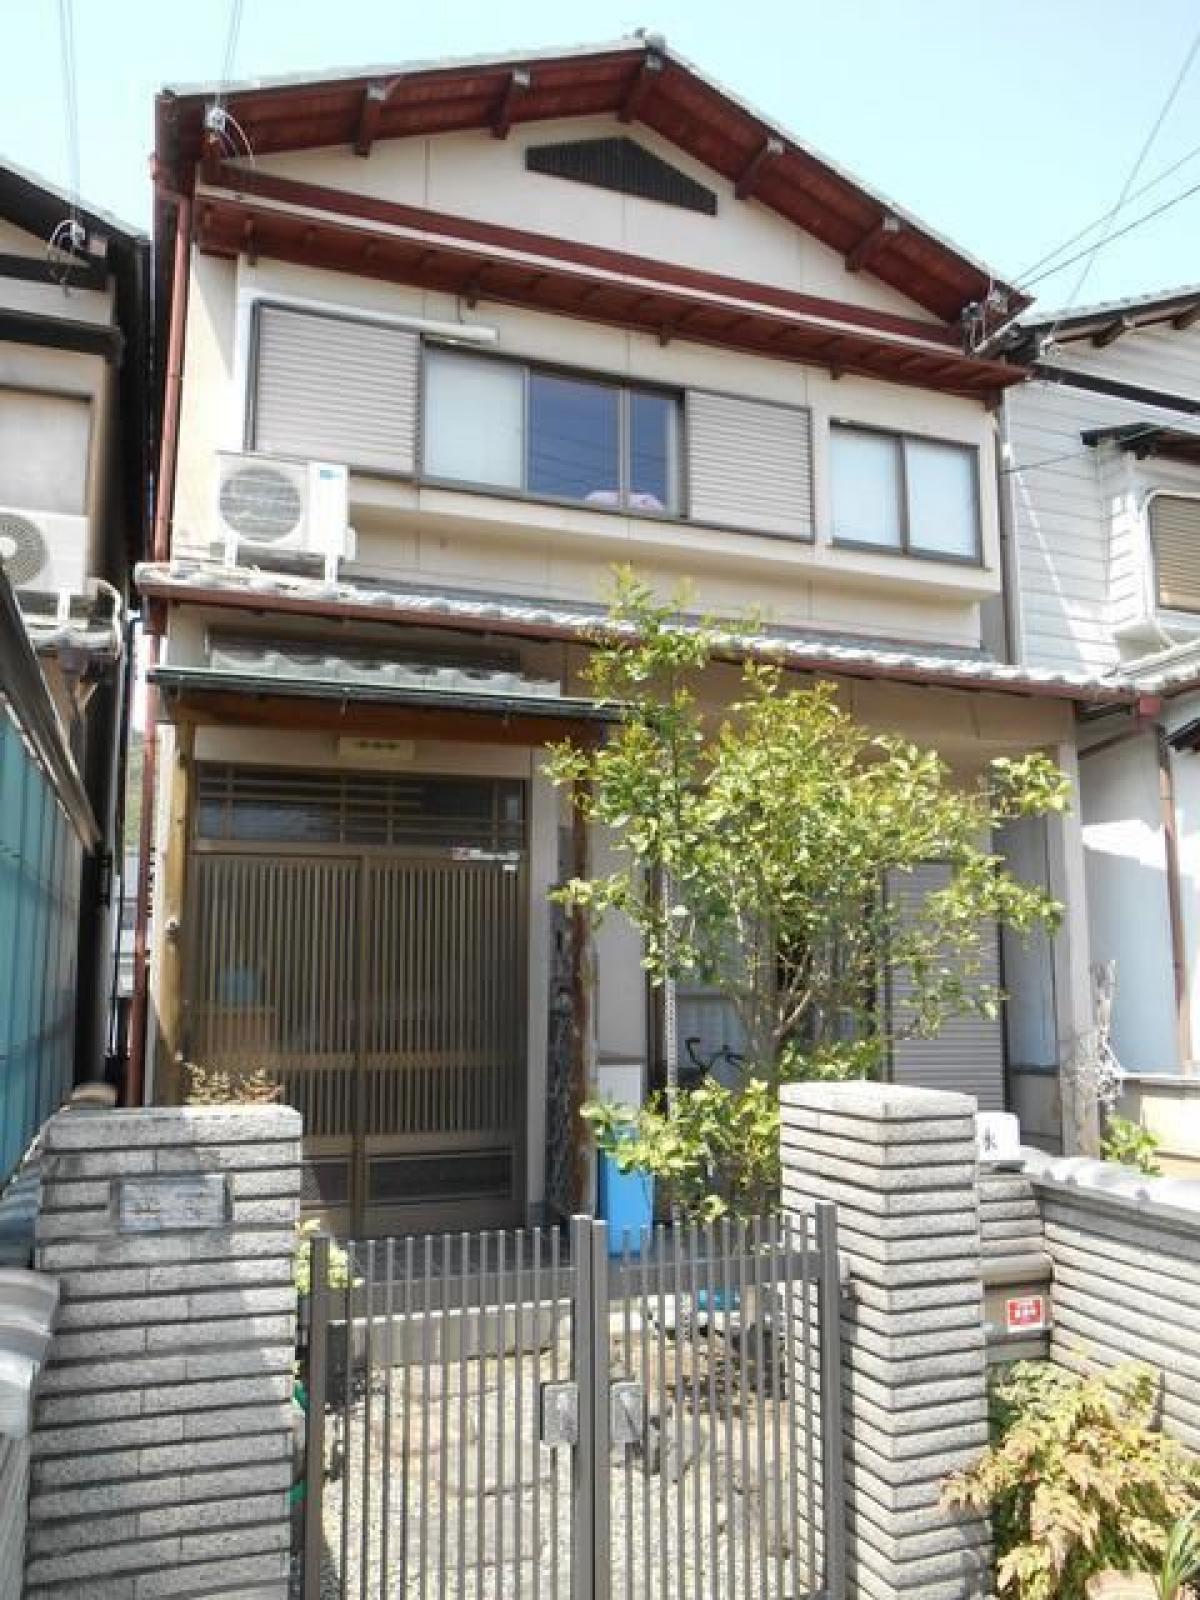 Picture of Home For Sale in Otokuni Gun Oyamazaki Cho, Kyoto, Japan